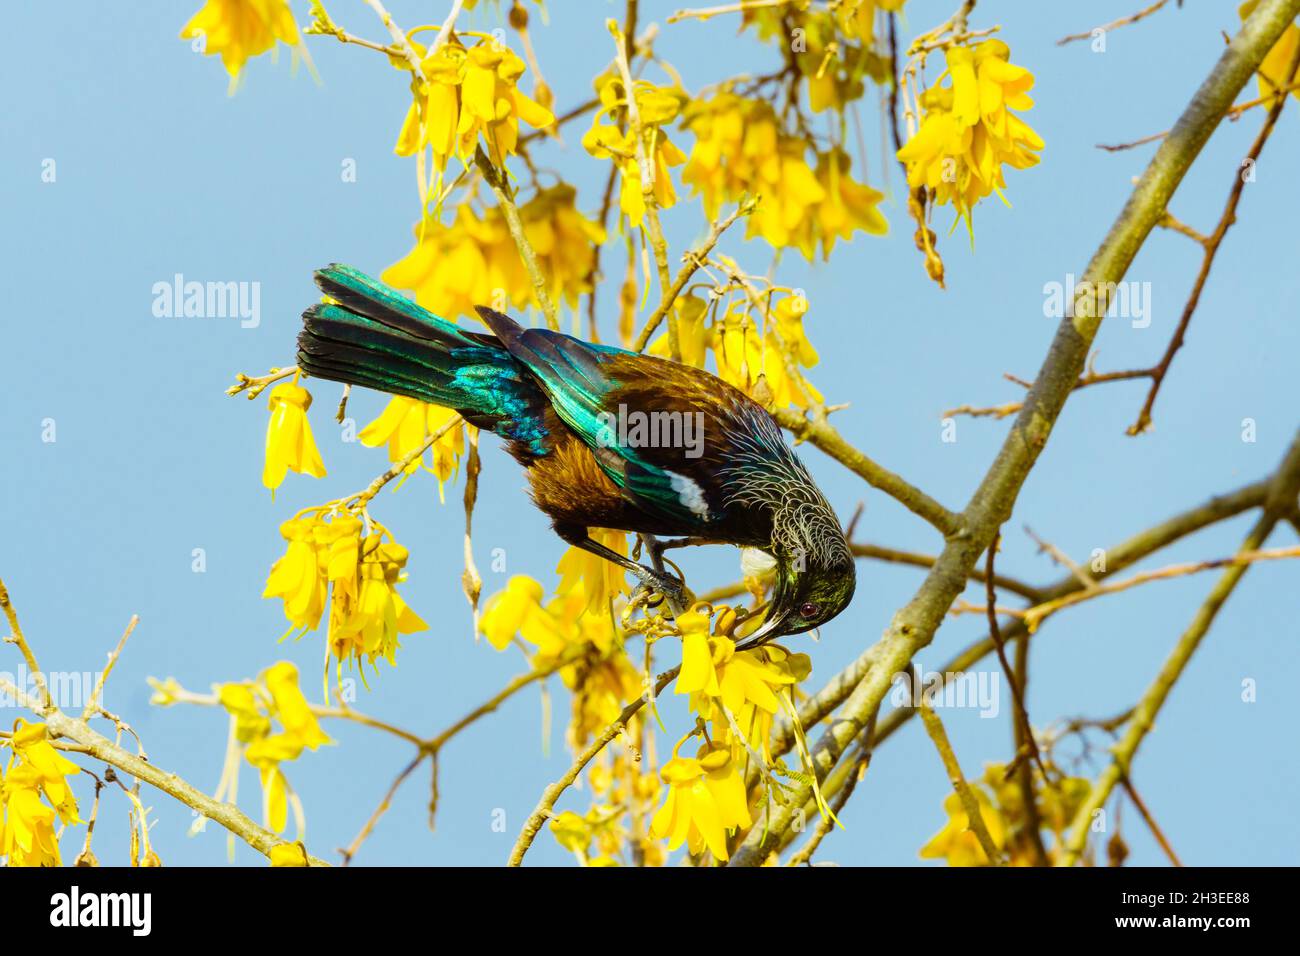 A beautiful Tui bird feeding on the yellow flowers of New Zealand's native Kowhai tree. Stock Photo